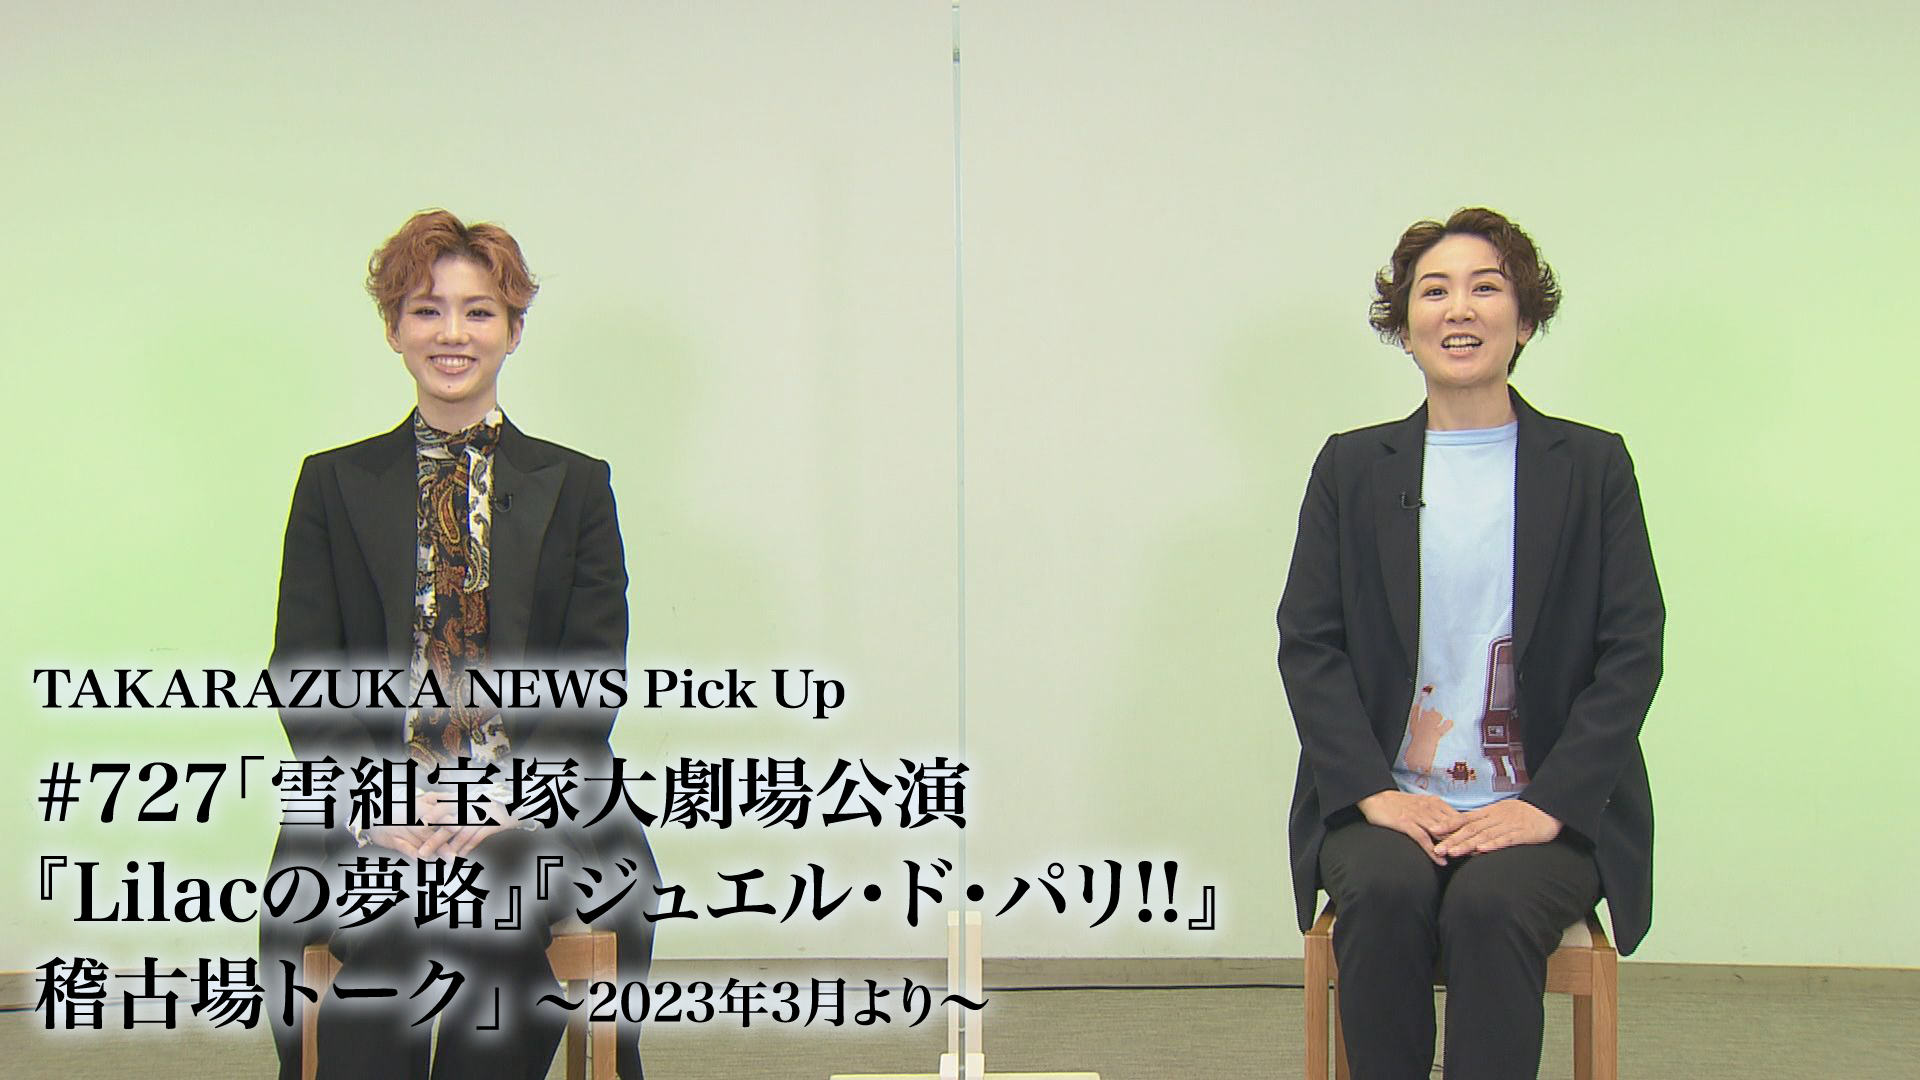 TAKARAZUKA NEWS Pick Up #727「雪組宝塚大劇場公演『Lilacの夢路